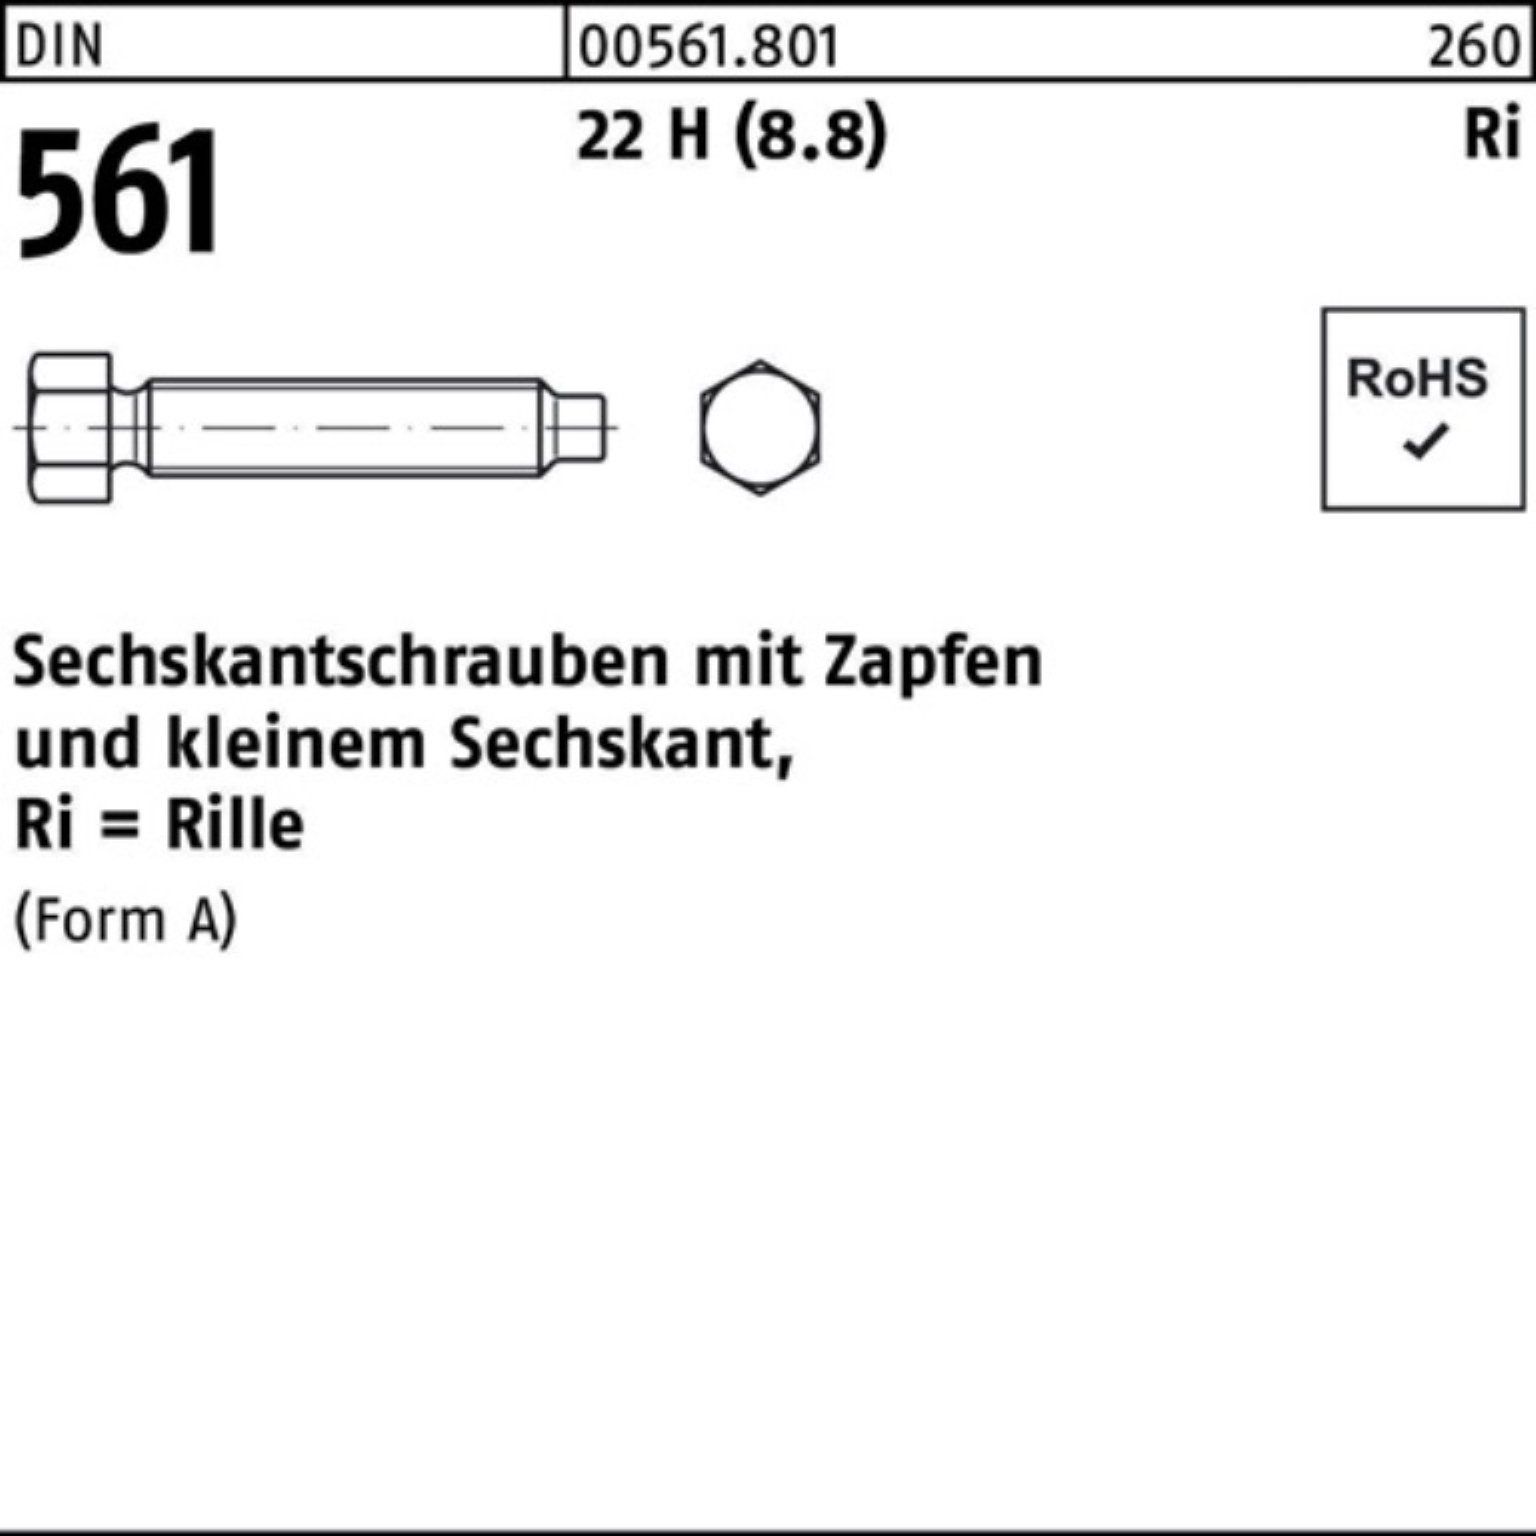 Reyher Sechskantschraube 100er 561 Sechskantschraube AM H St Pack 100 22 8x 20 DIN Zapfen (8.8)